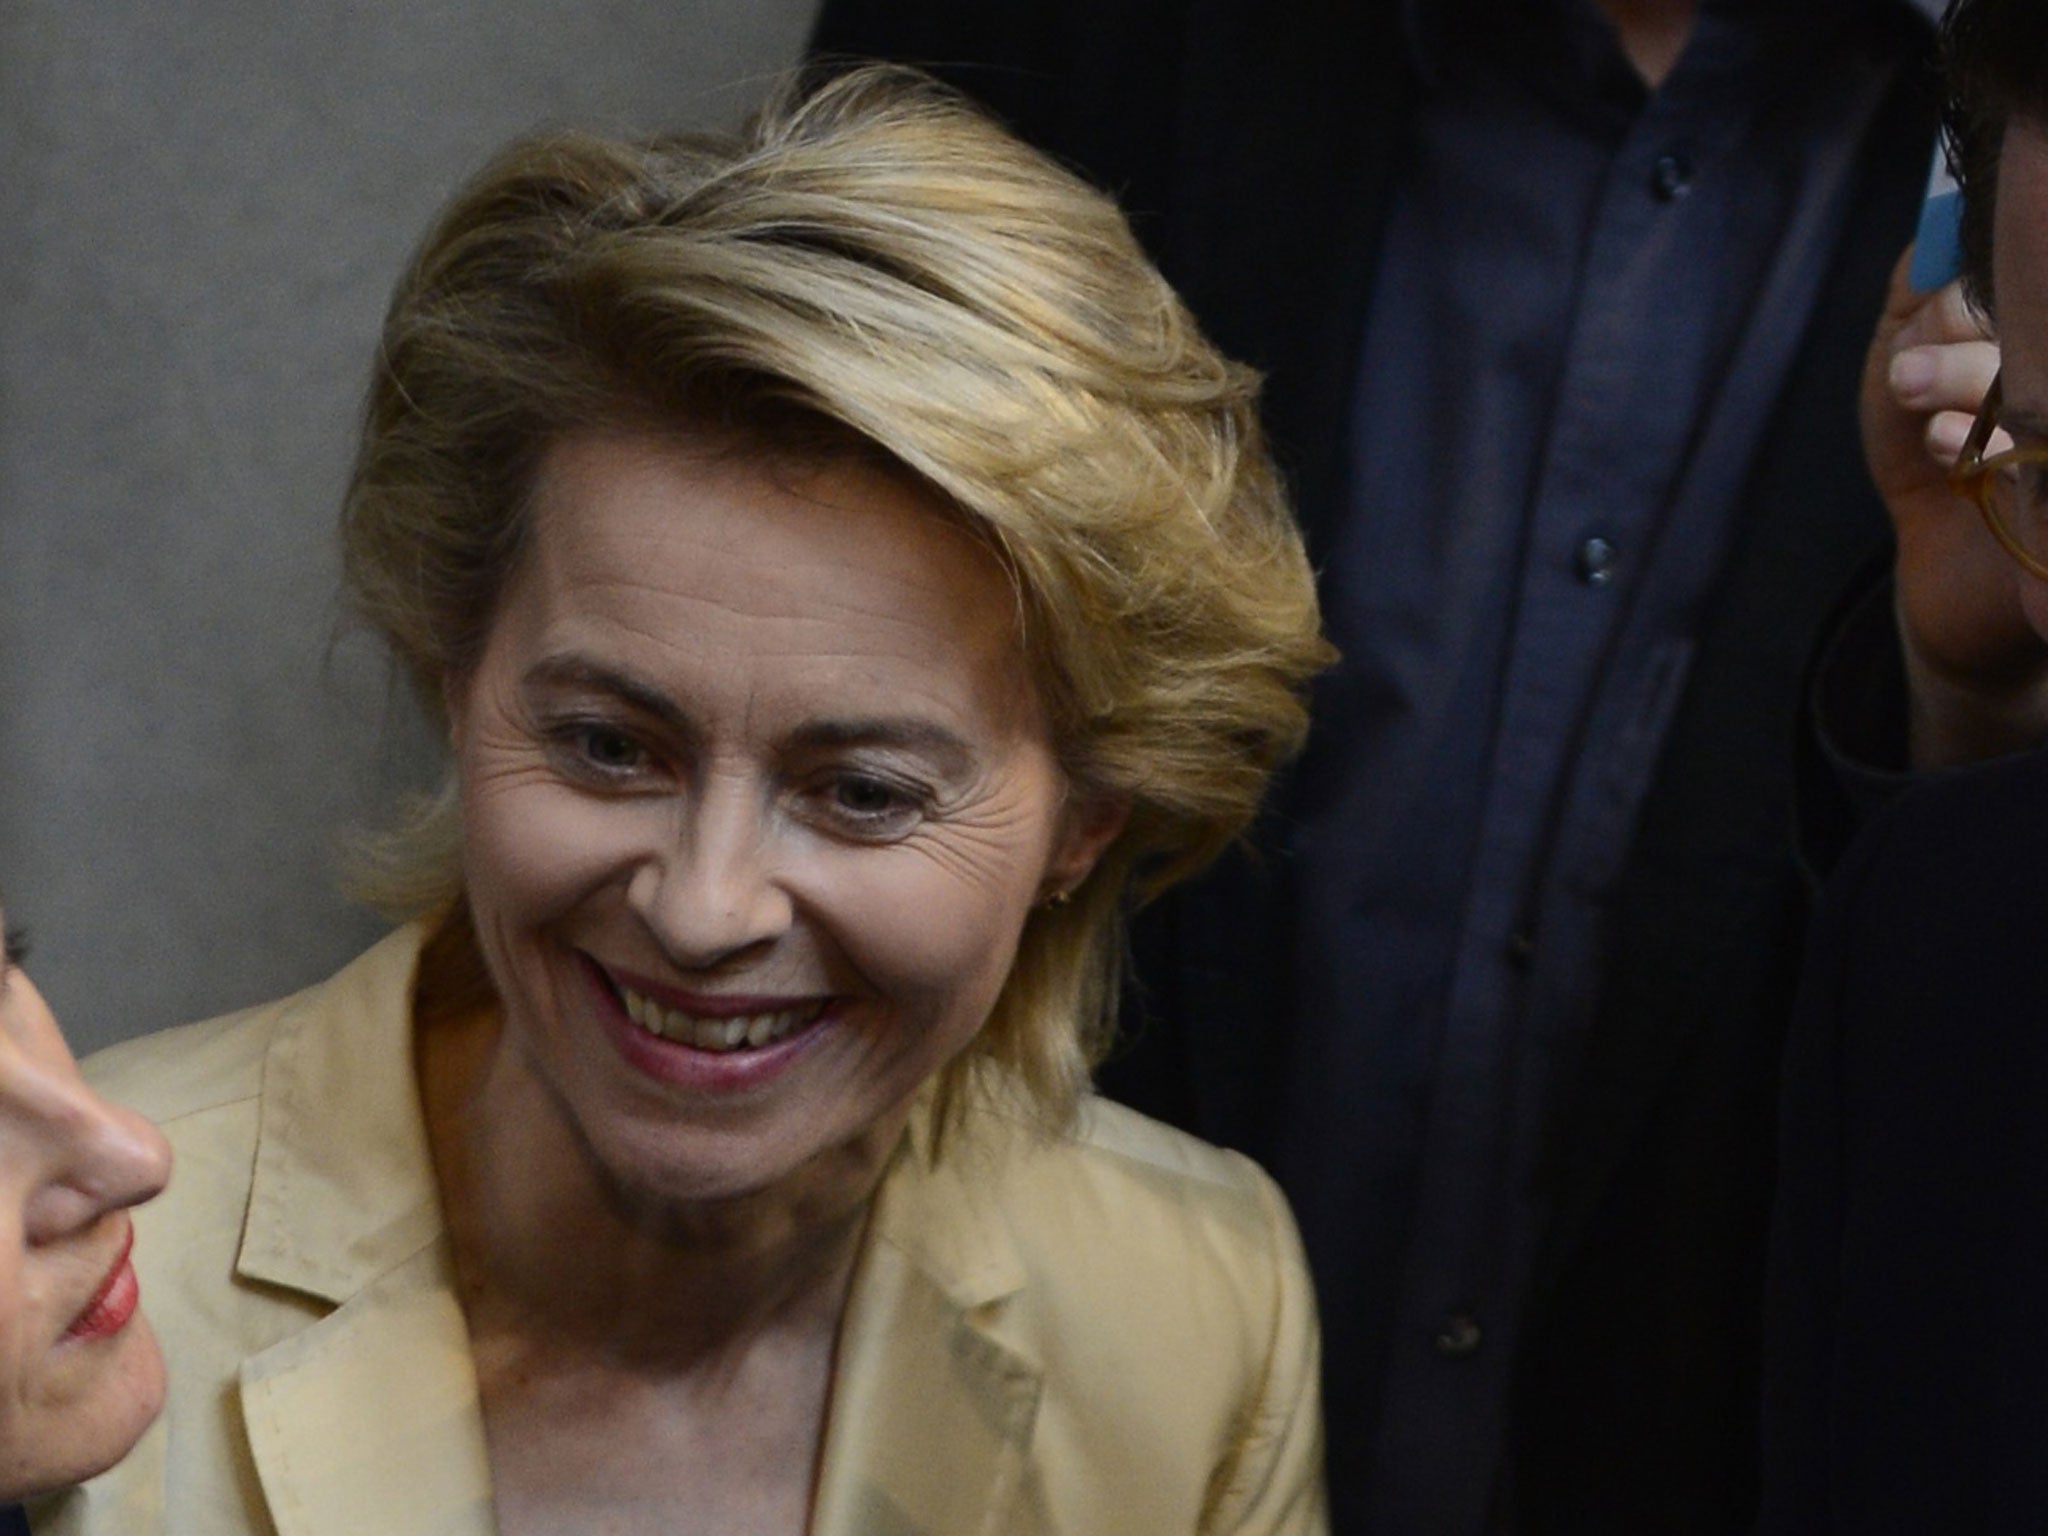 Ursula von der Leyen comes from a Christian Democrat political dynasty